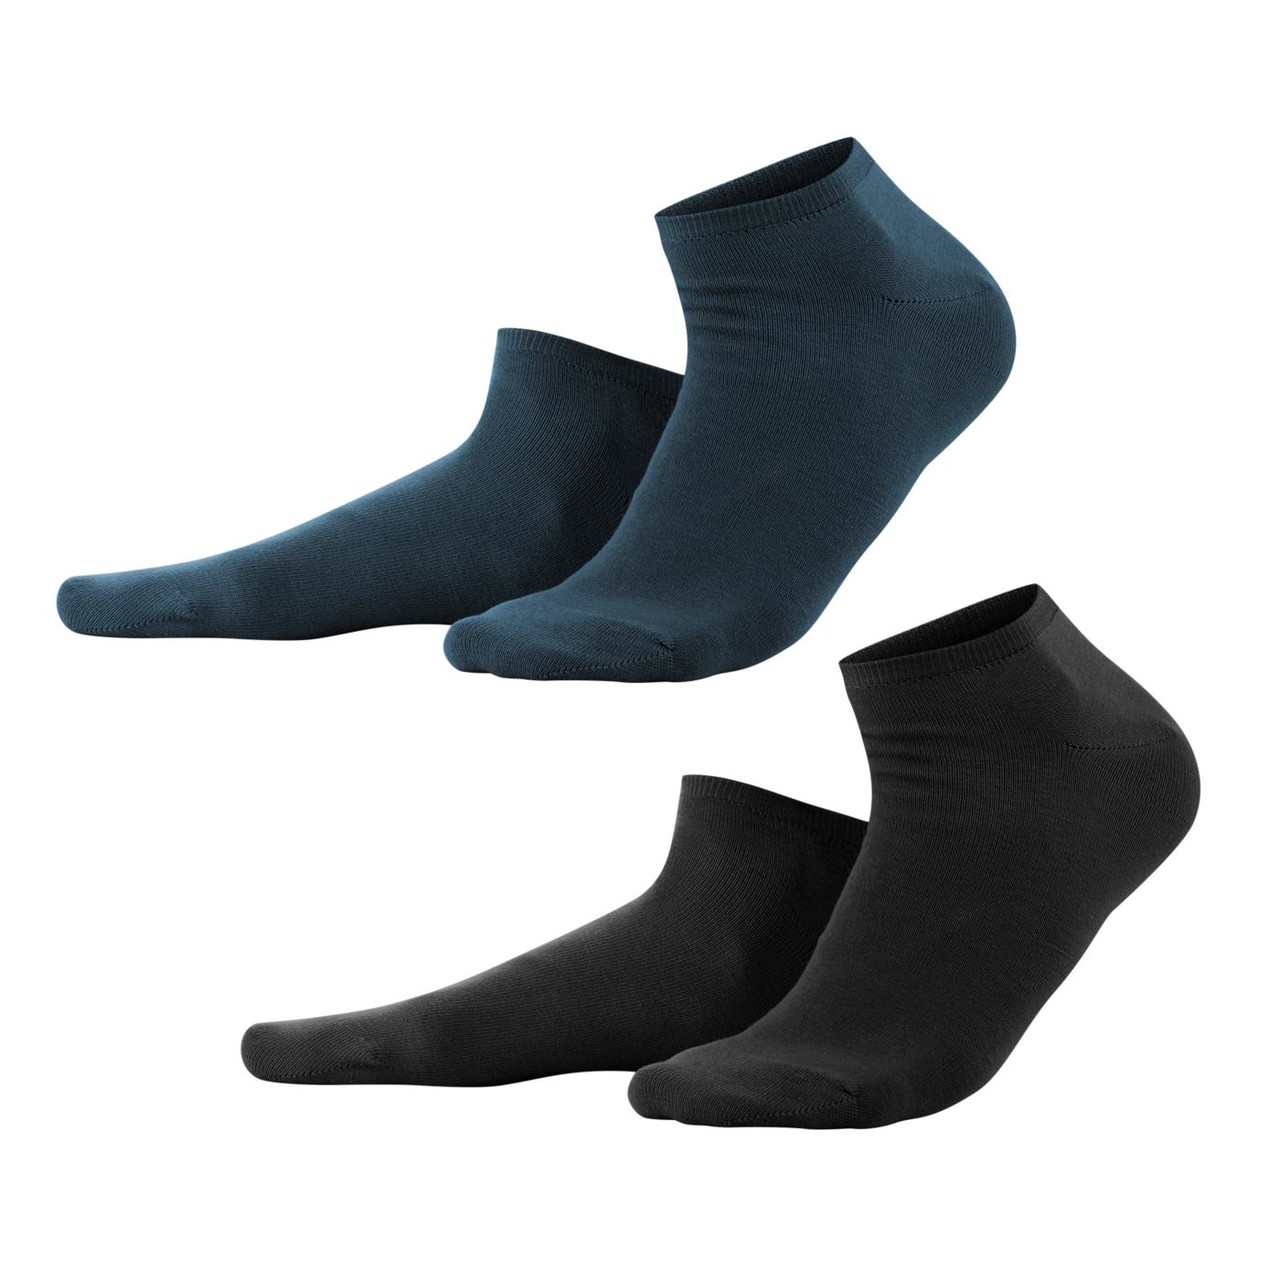 Organic cotton socks 2 pack | Glara.eu ❤️